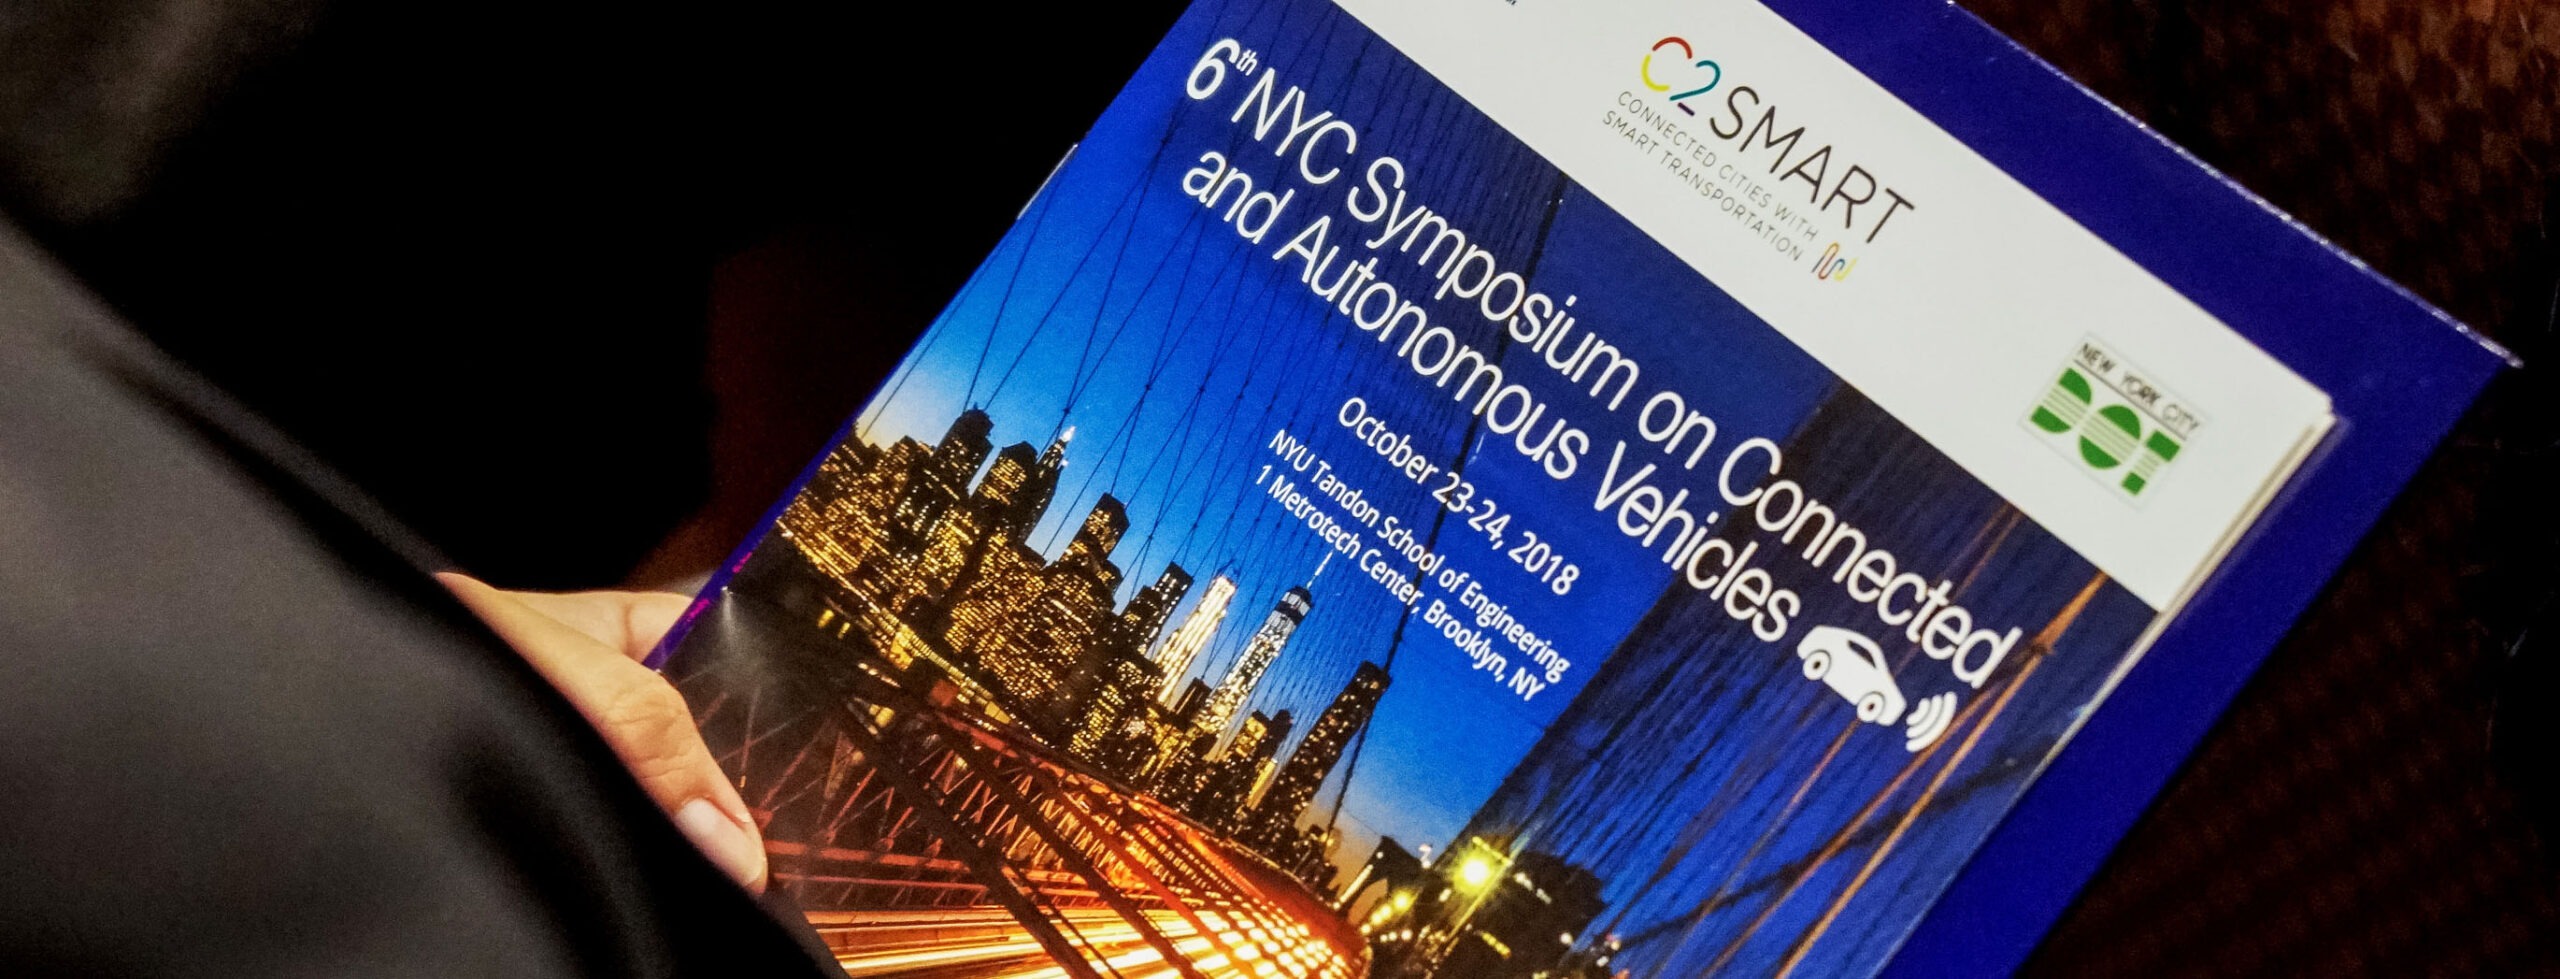 6th NYC CAV Symposium Program cover